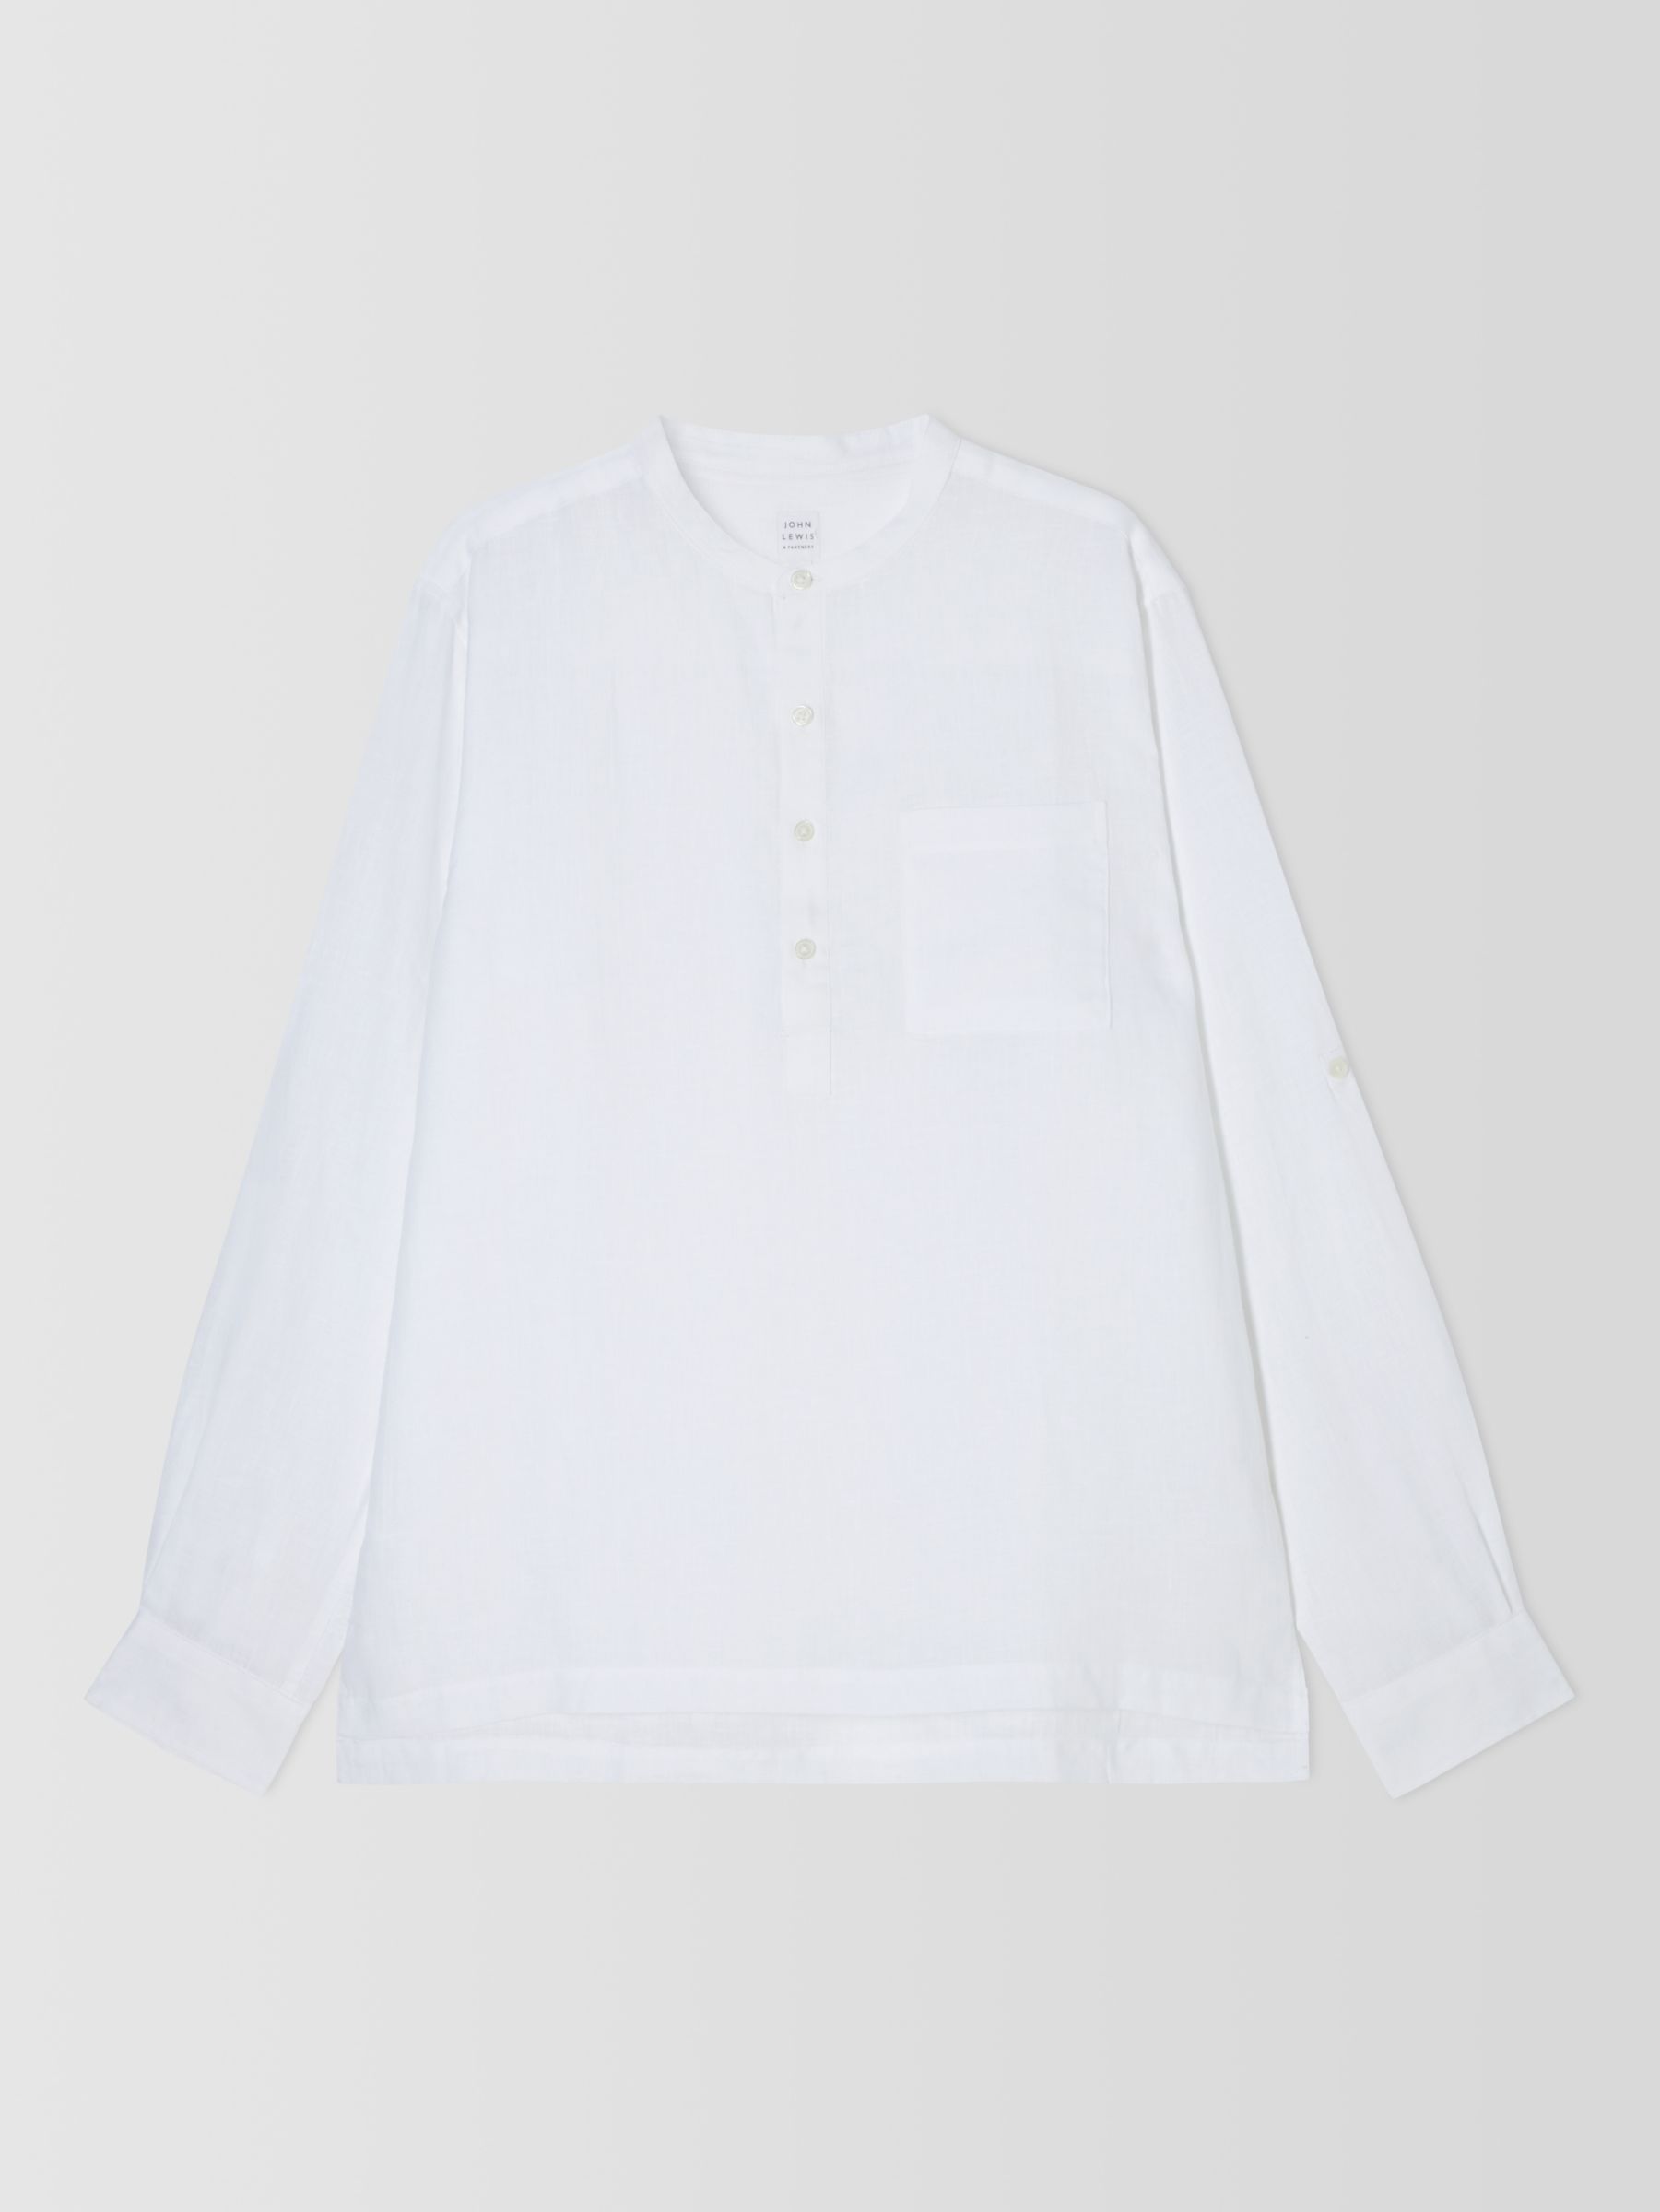 John Lewis Linen Plain Grandad Collar Shirt, White, S